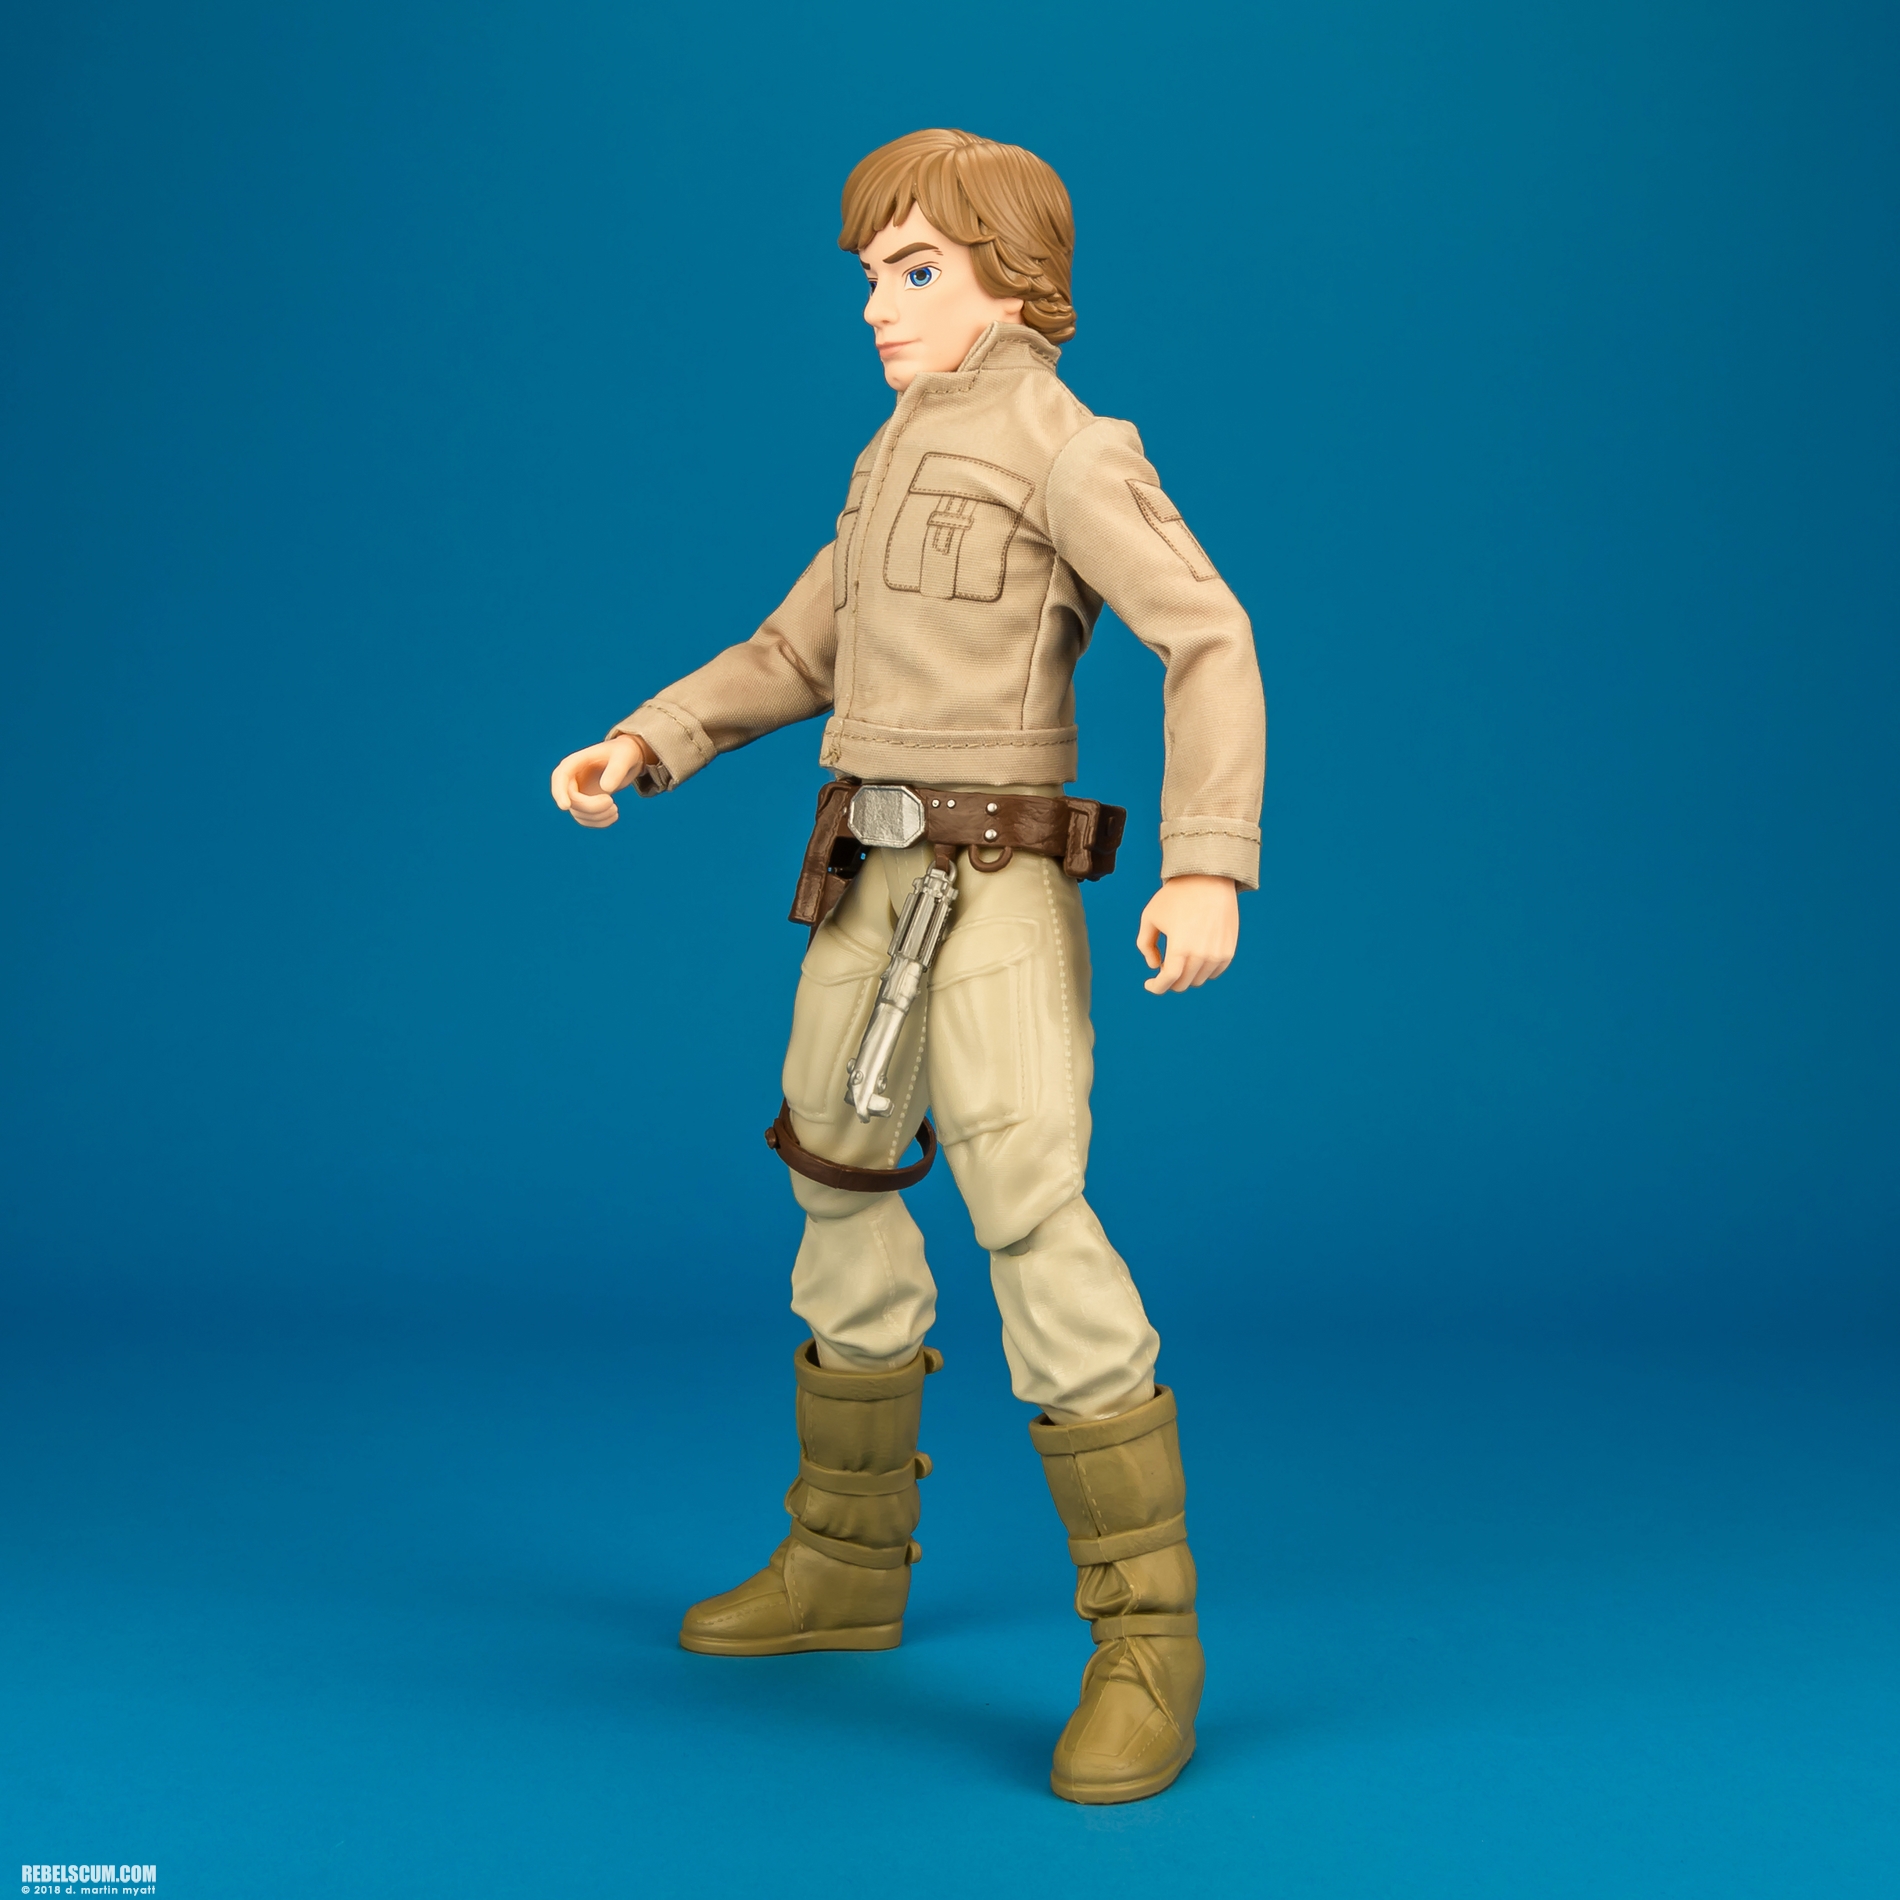 Luke-Skywalker-Yoda-Forces-Of-Destiny-Hasbro-Star-Wars-003.jpg